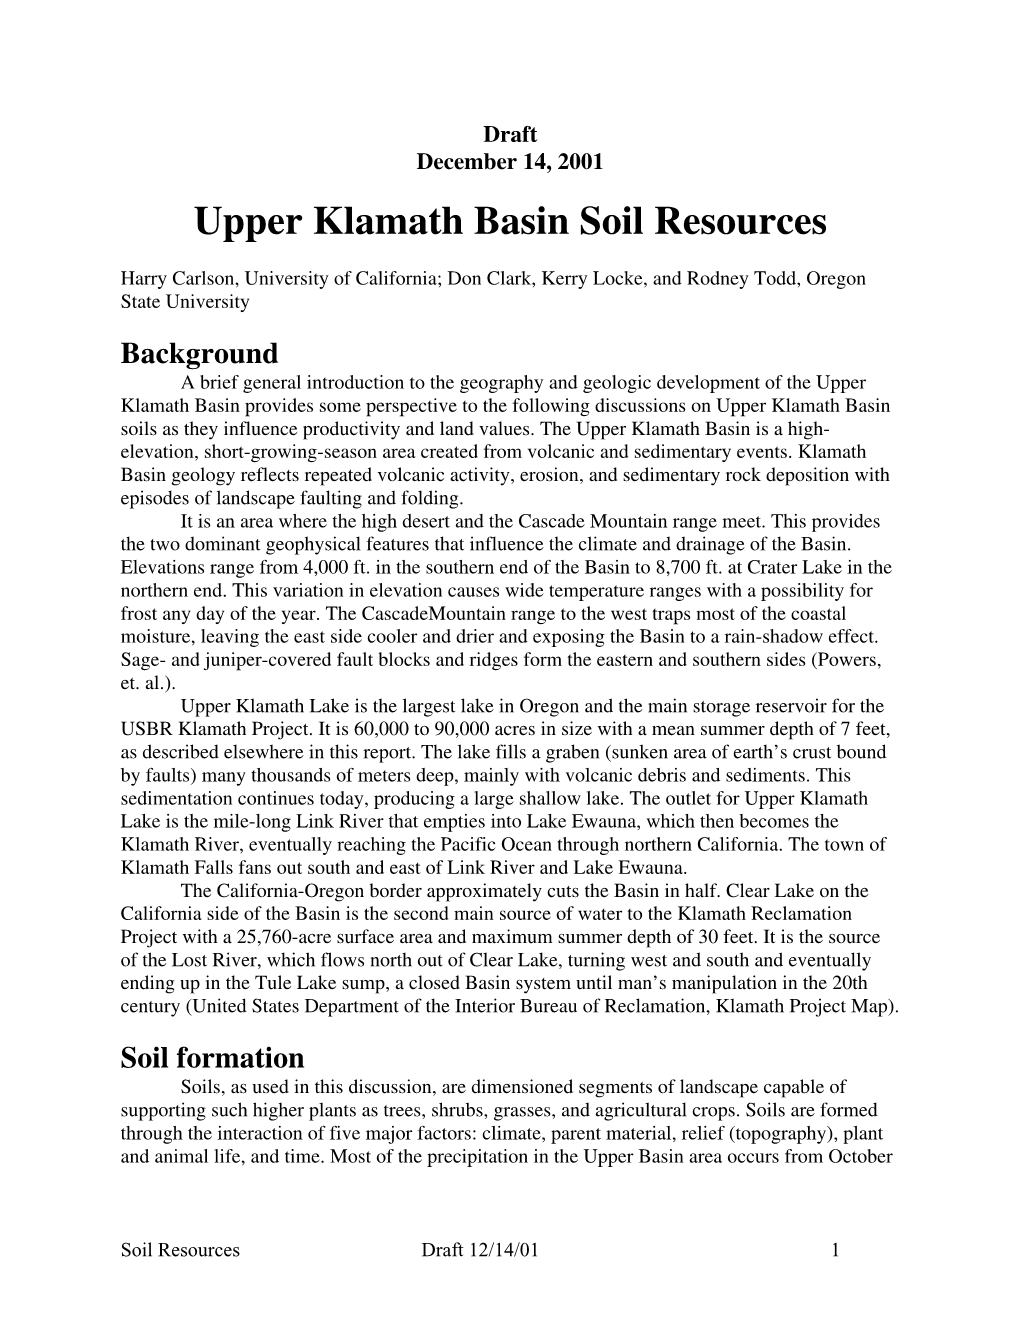 Upper Klamath Basin Soil Resources